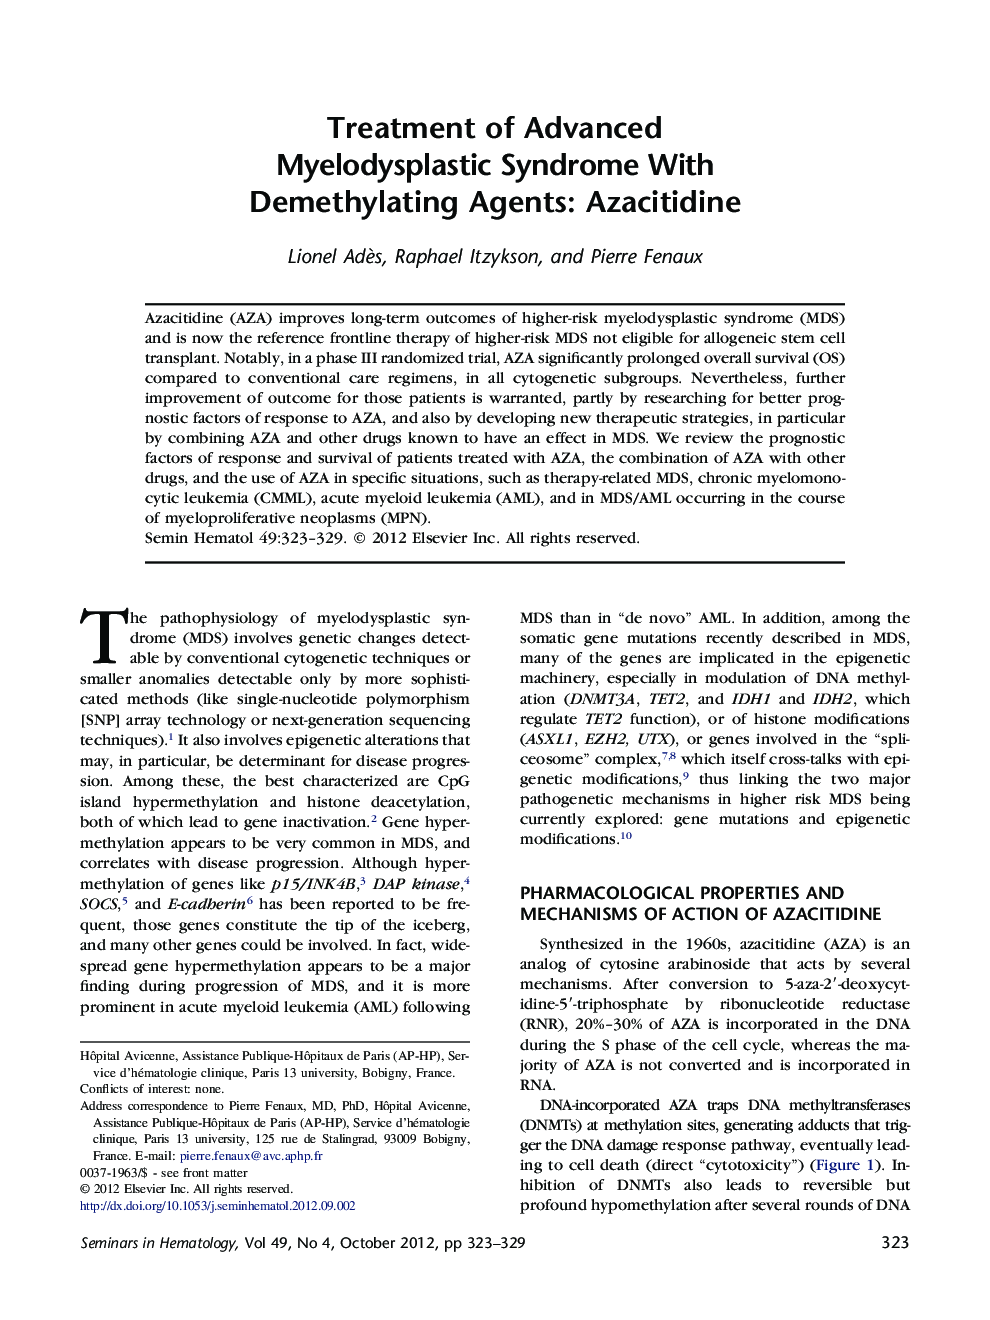 Treatment of Advanced Myelodysplastic Syndrome With Demethylating Agents: Azacitidine 